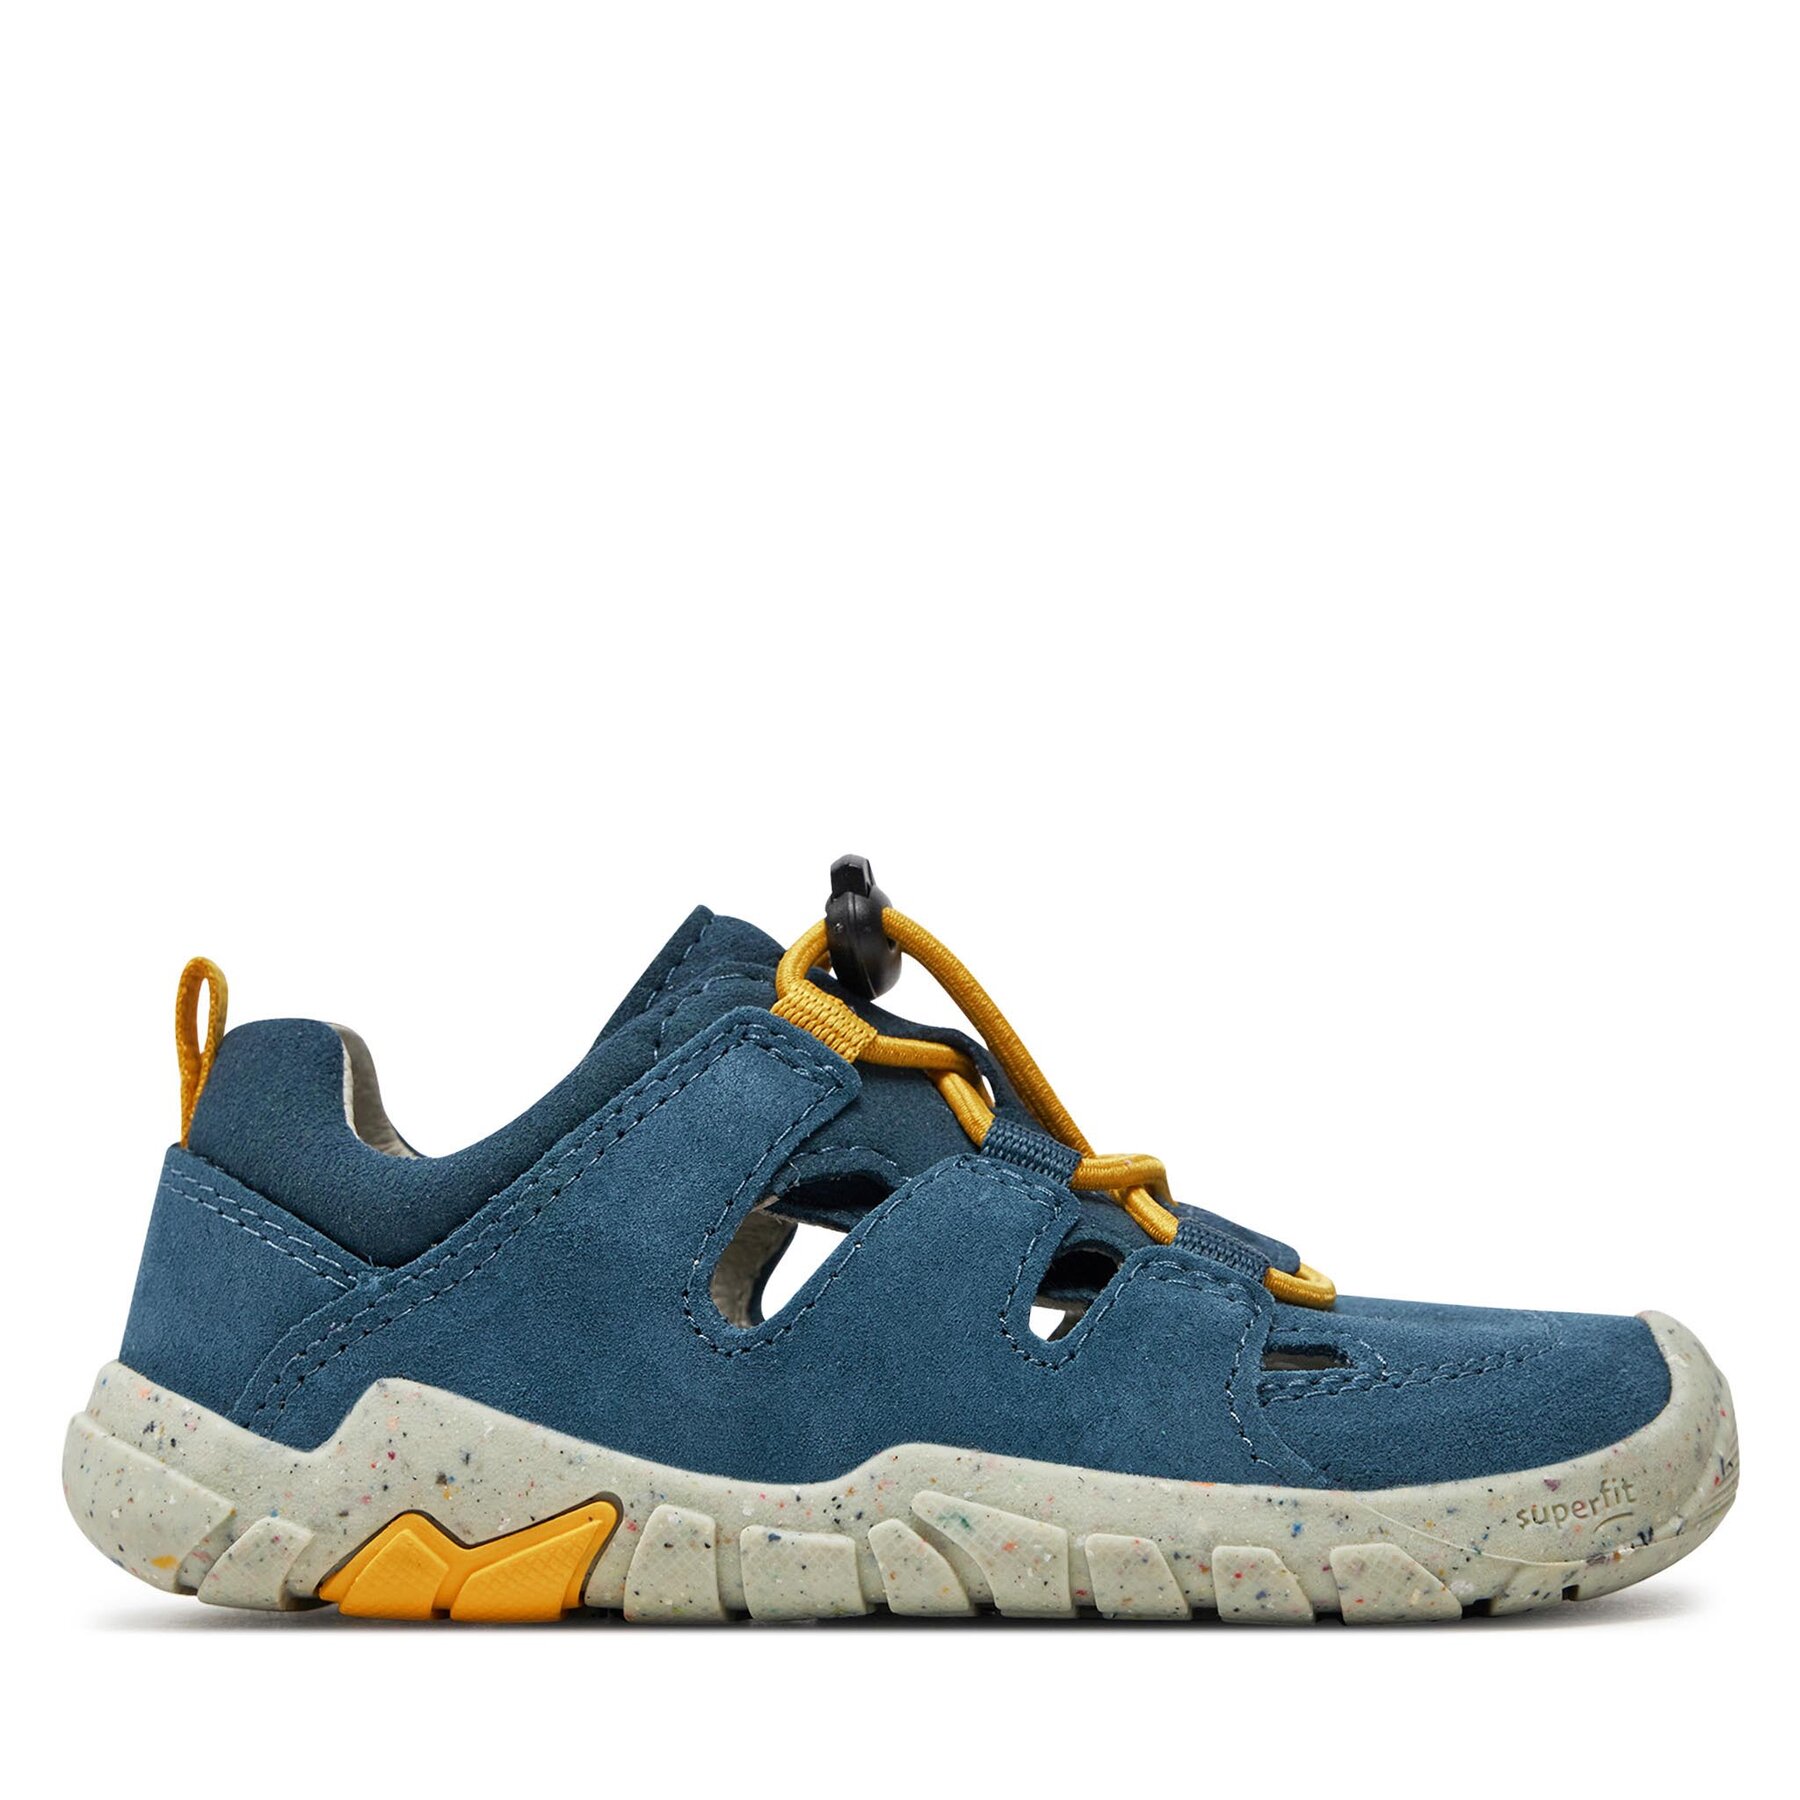 Cipele Superfit 1-006037-8000 M Blue/Yellow